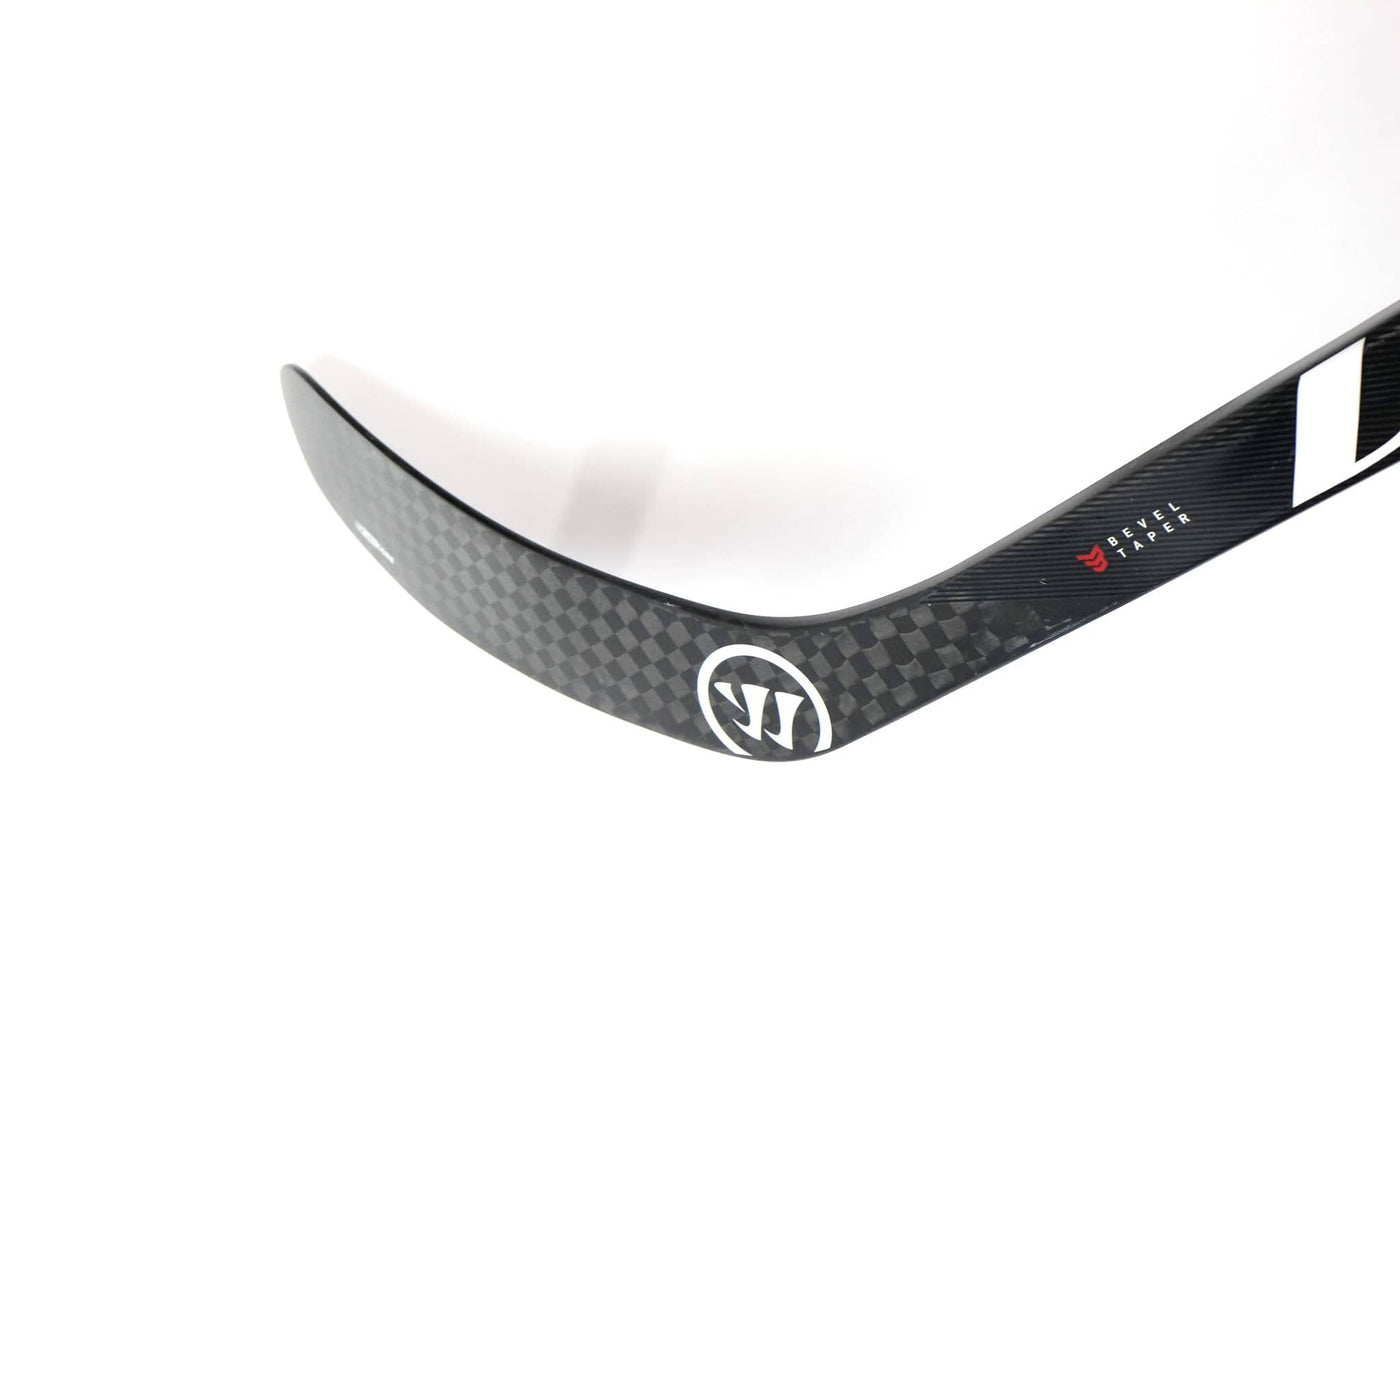 Warrior Novium Junior Hockey Stick - The Hockey Shop Source For Sports